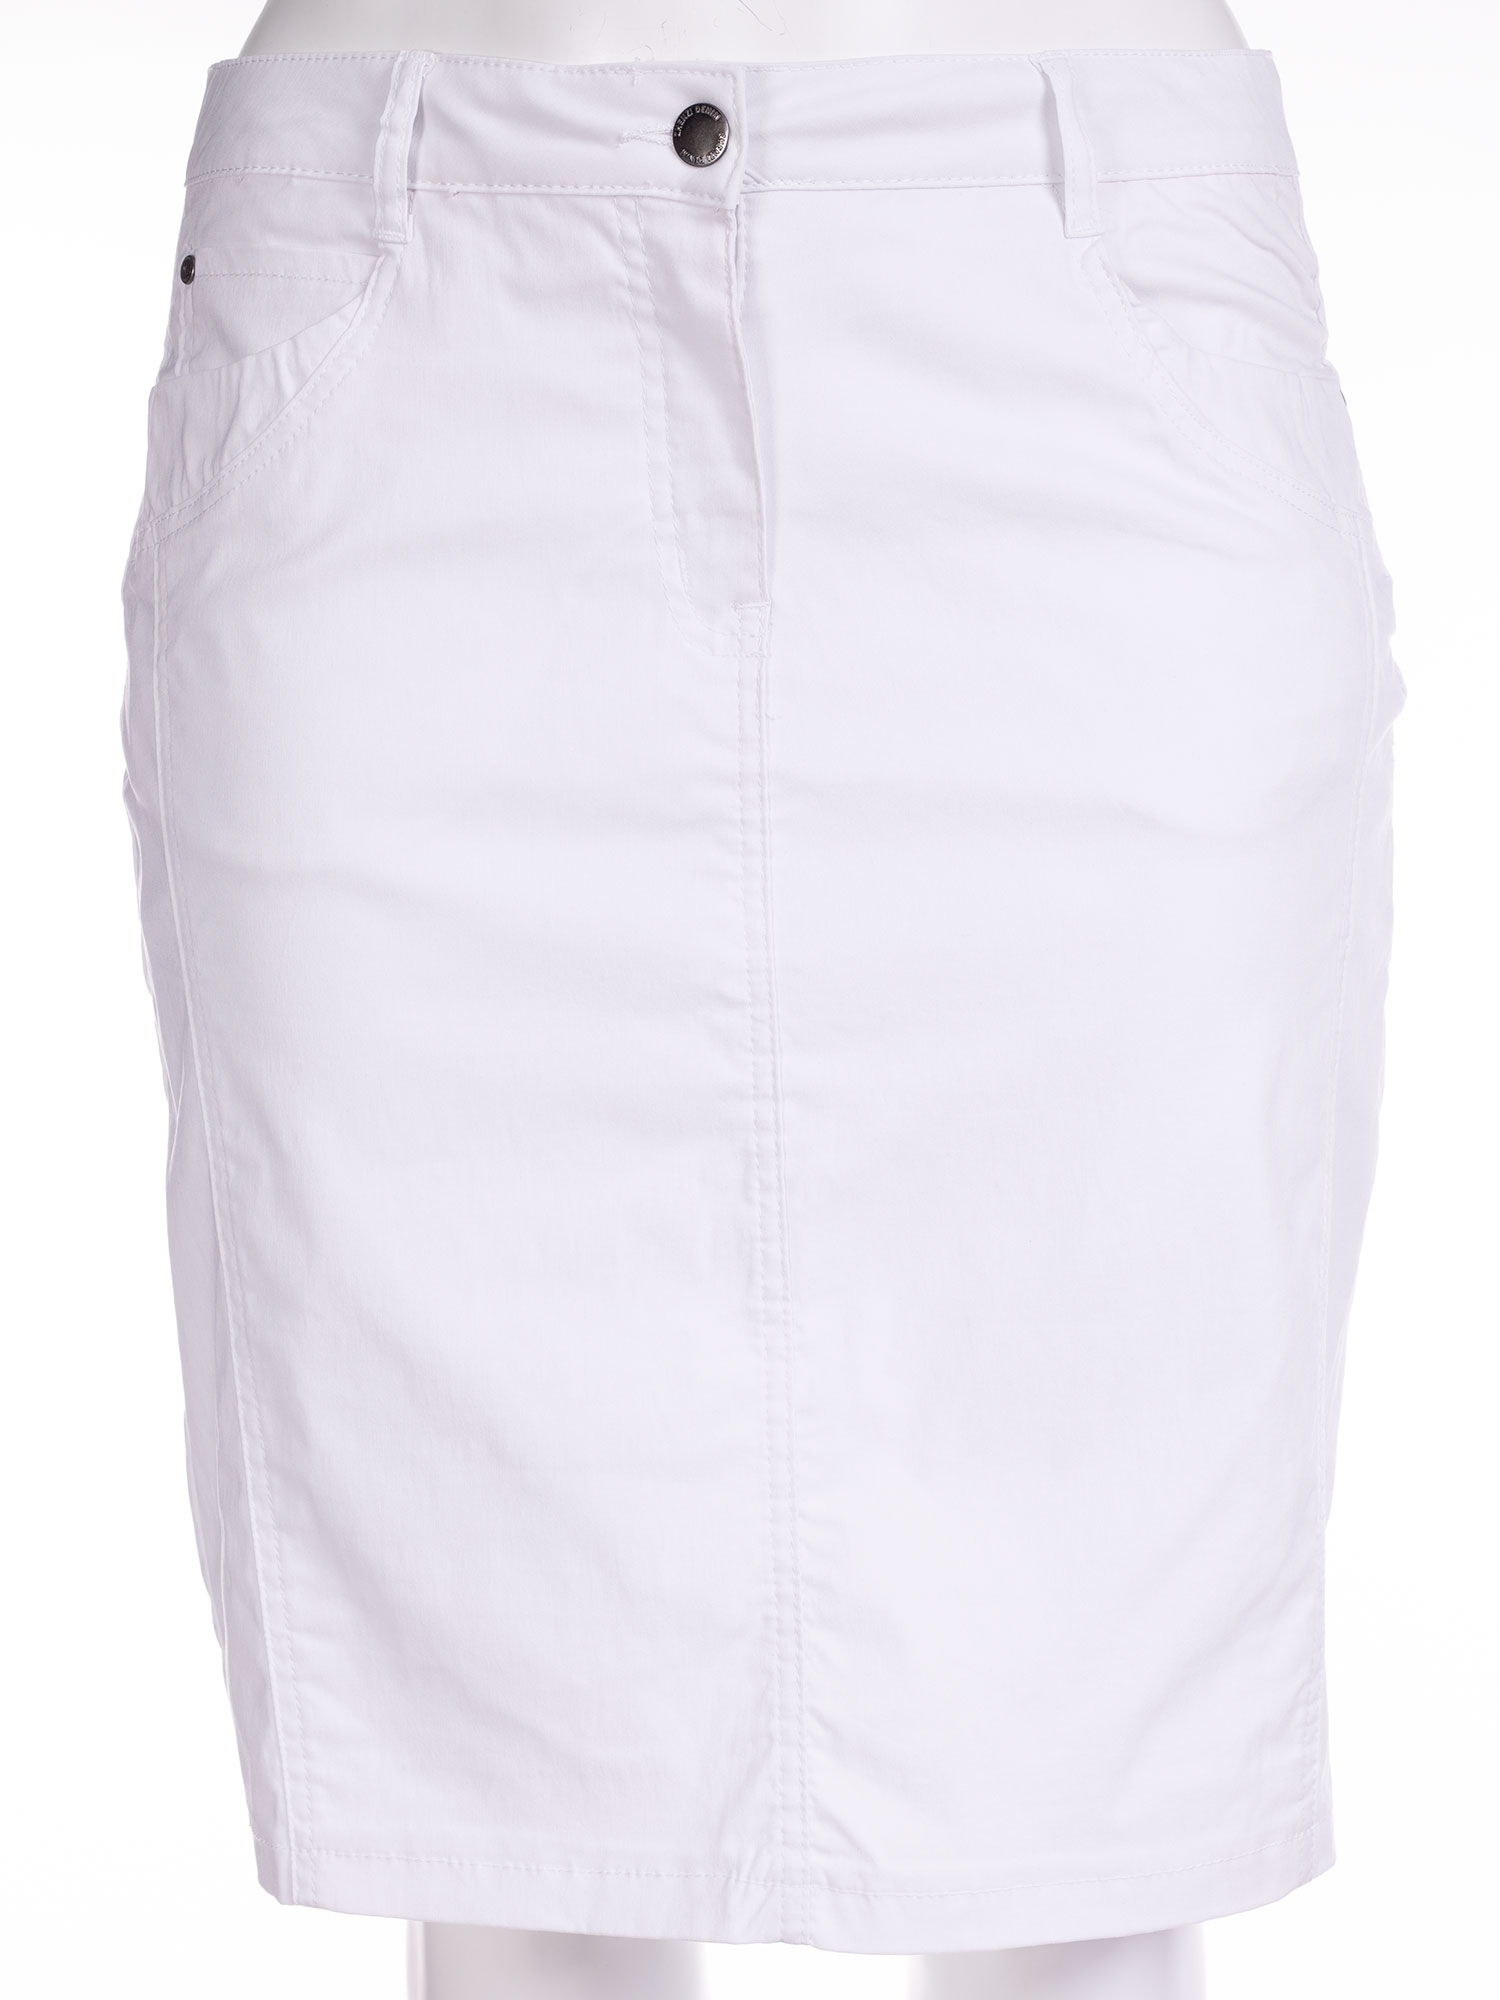 Hvid nederdel med stretch og skånebukser fra Zhenzi